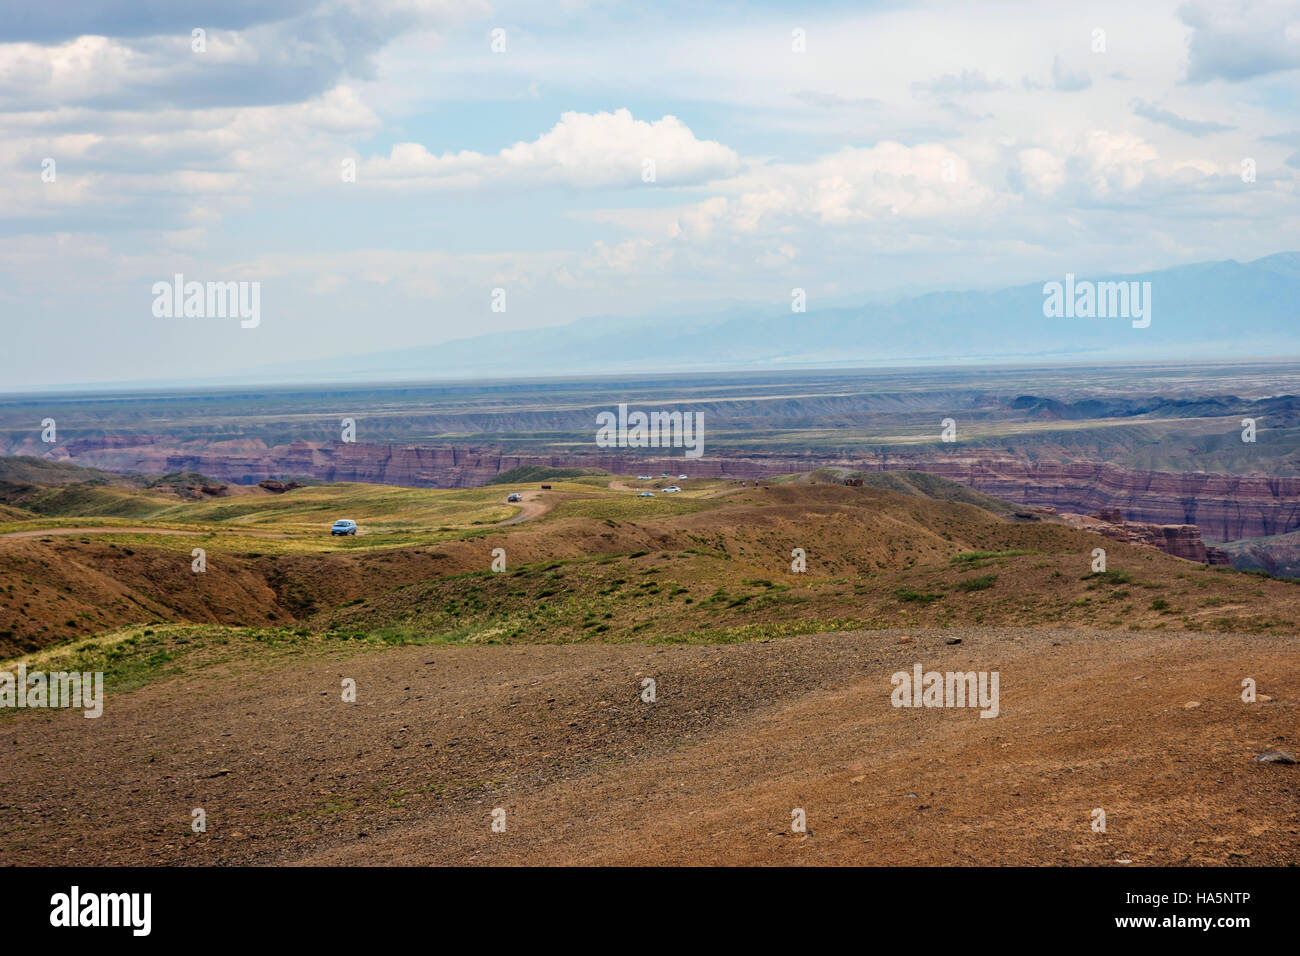 Vista su Sharyn o Charyn Canyon, Kazakistan, secondo canyon più grande del mondo Foto Stock